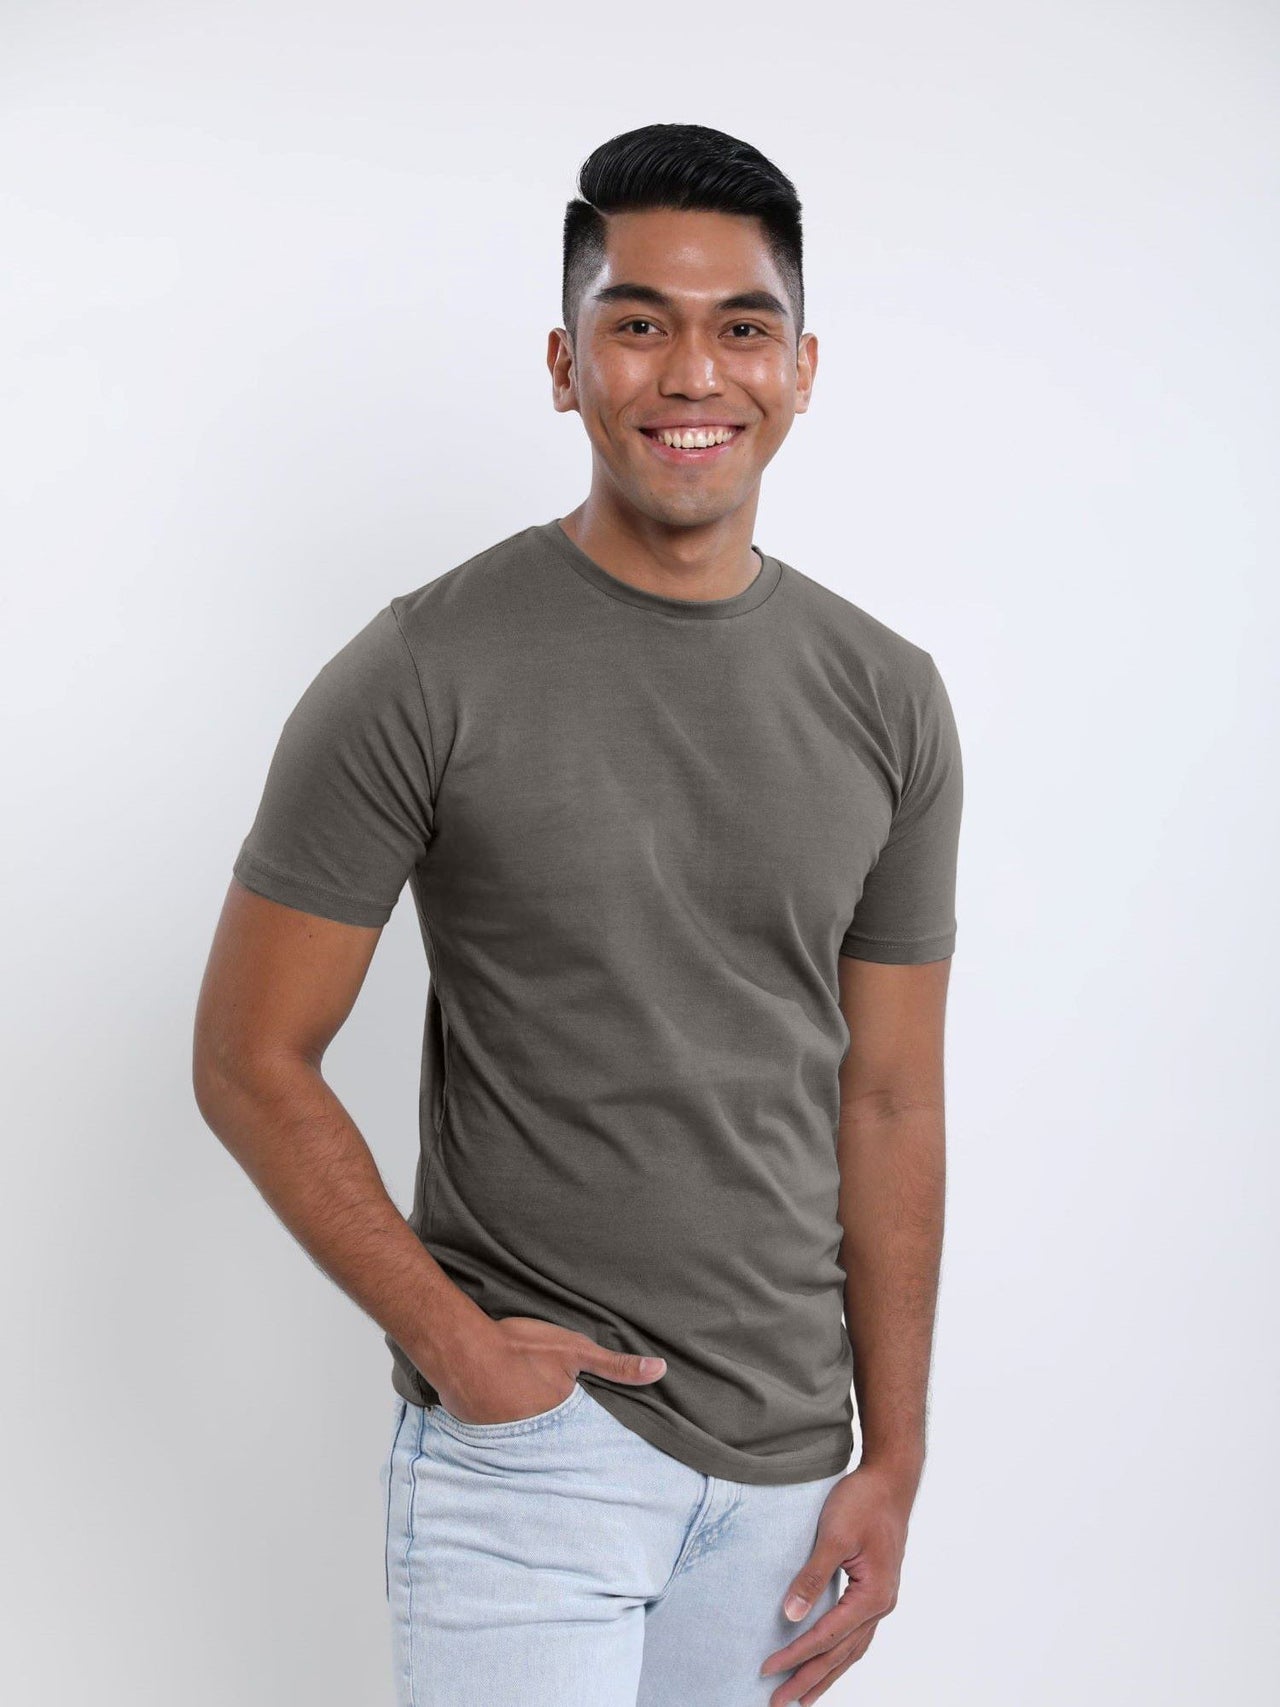 A tall slim guy wearing a dark grey medium tall t-shirt, hand in pocket.